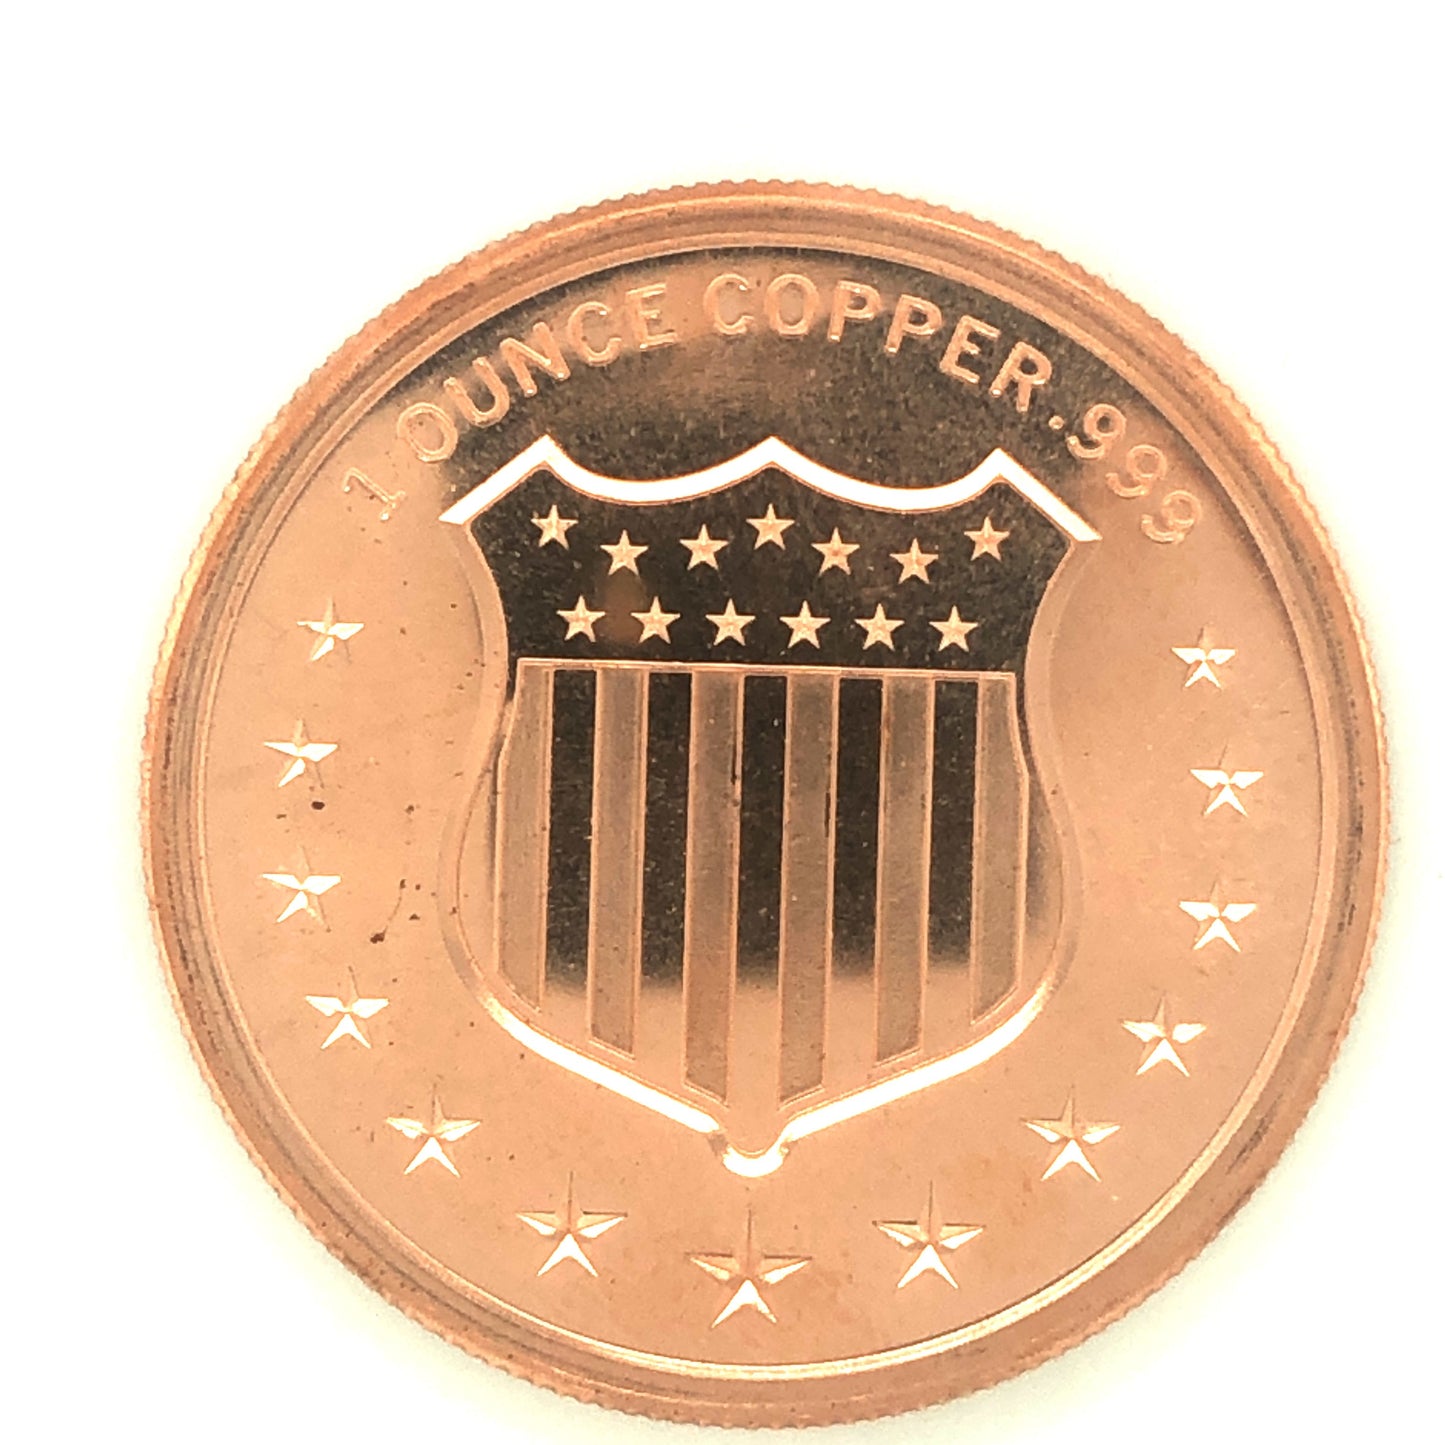 The Rattler 1 oz. .999 Copper Coin